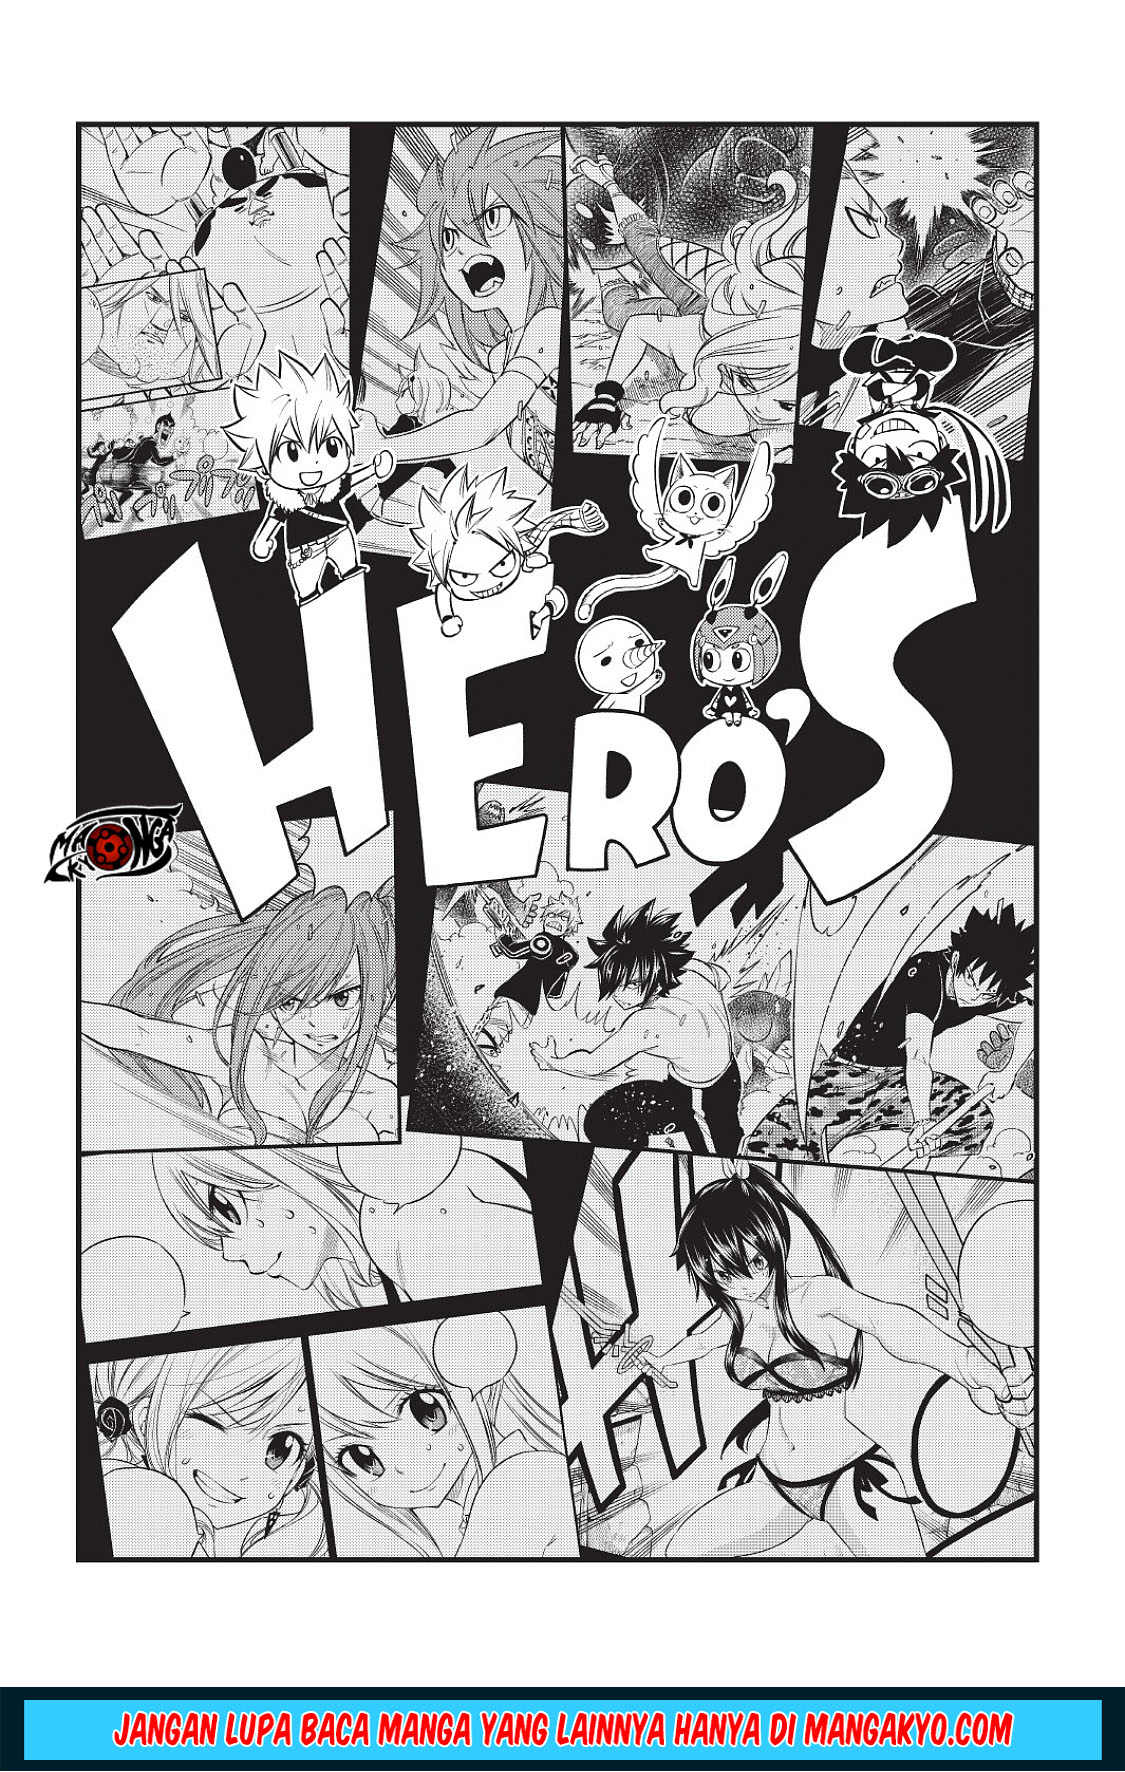 Mashima HERO’S Chapter 10 End